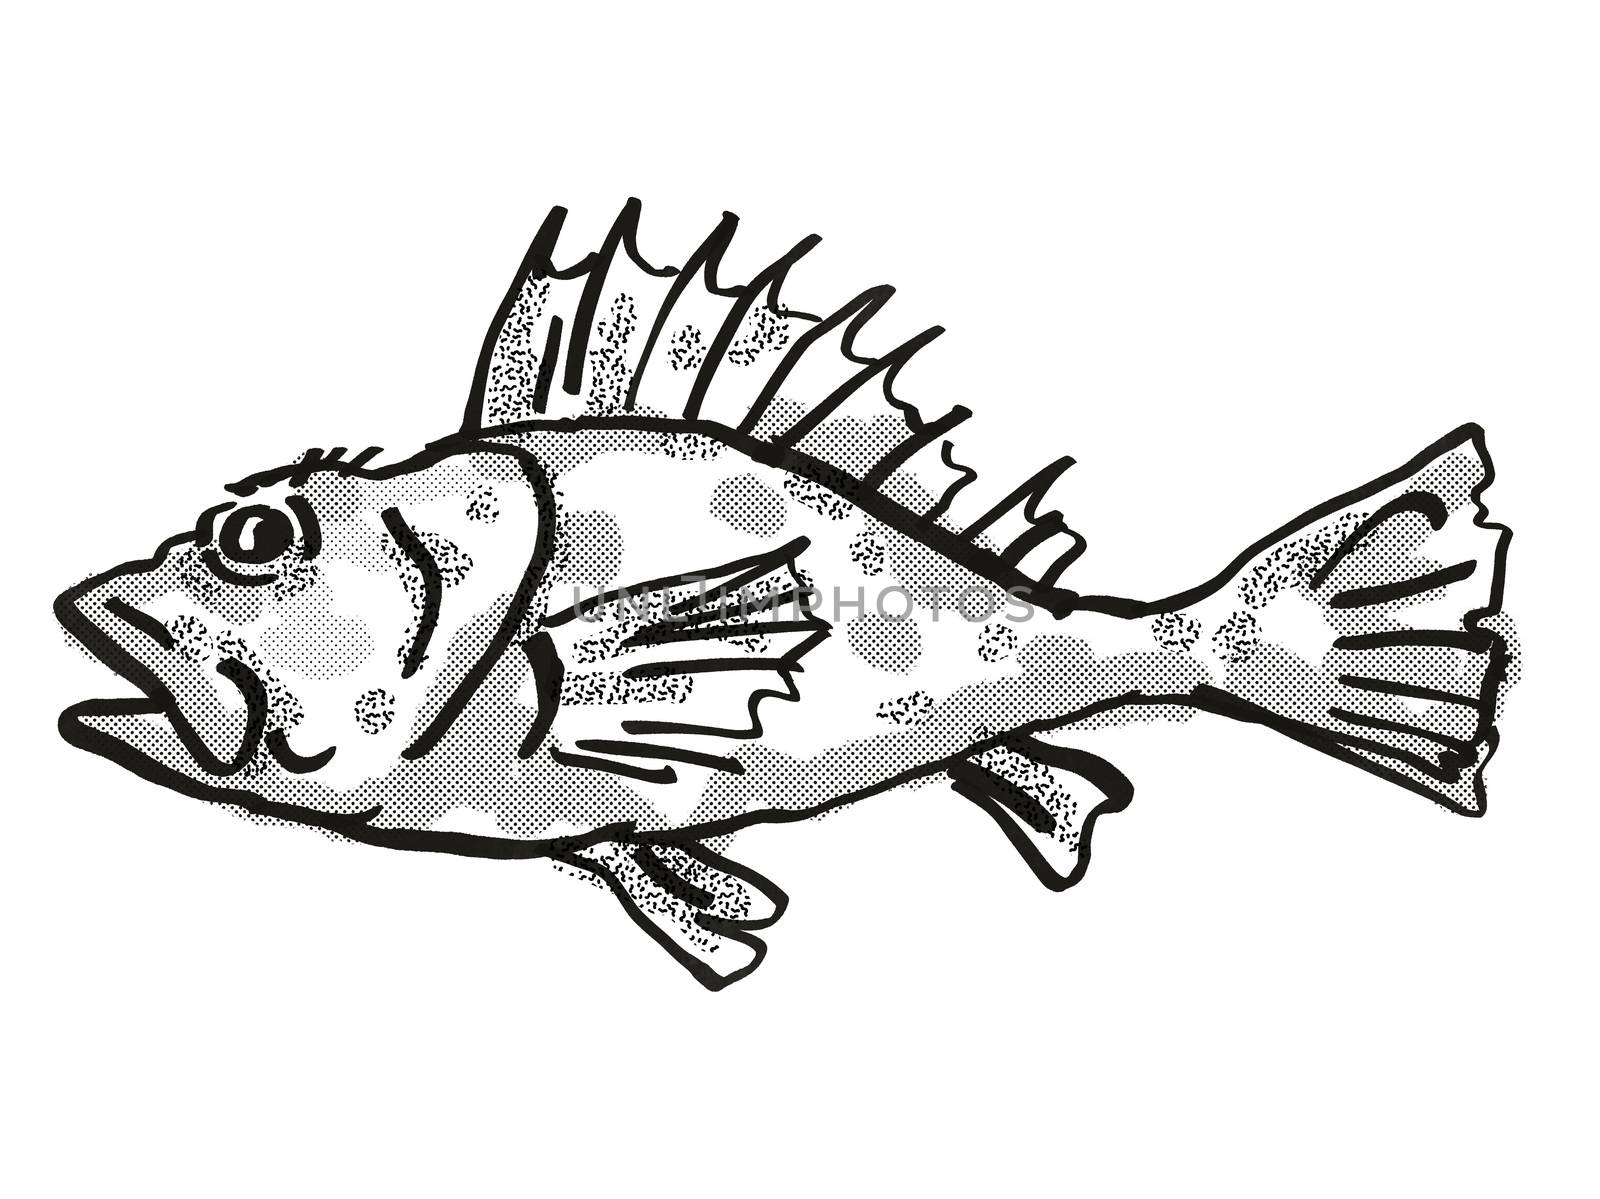 Western Scorpionfish Australian Fish Cartoon Retro Drawing by patrimonio